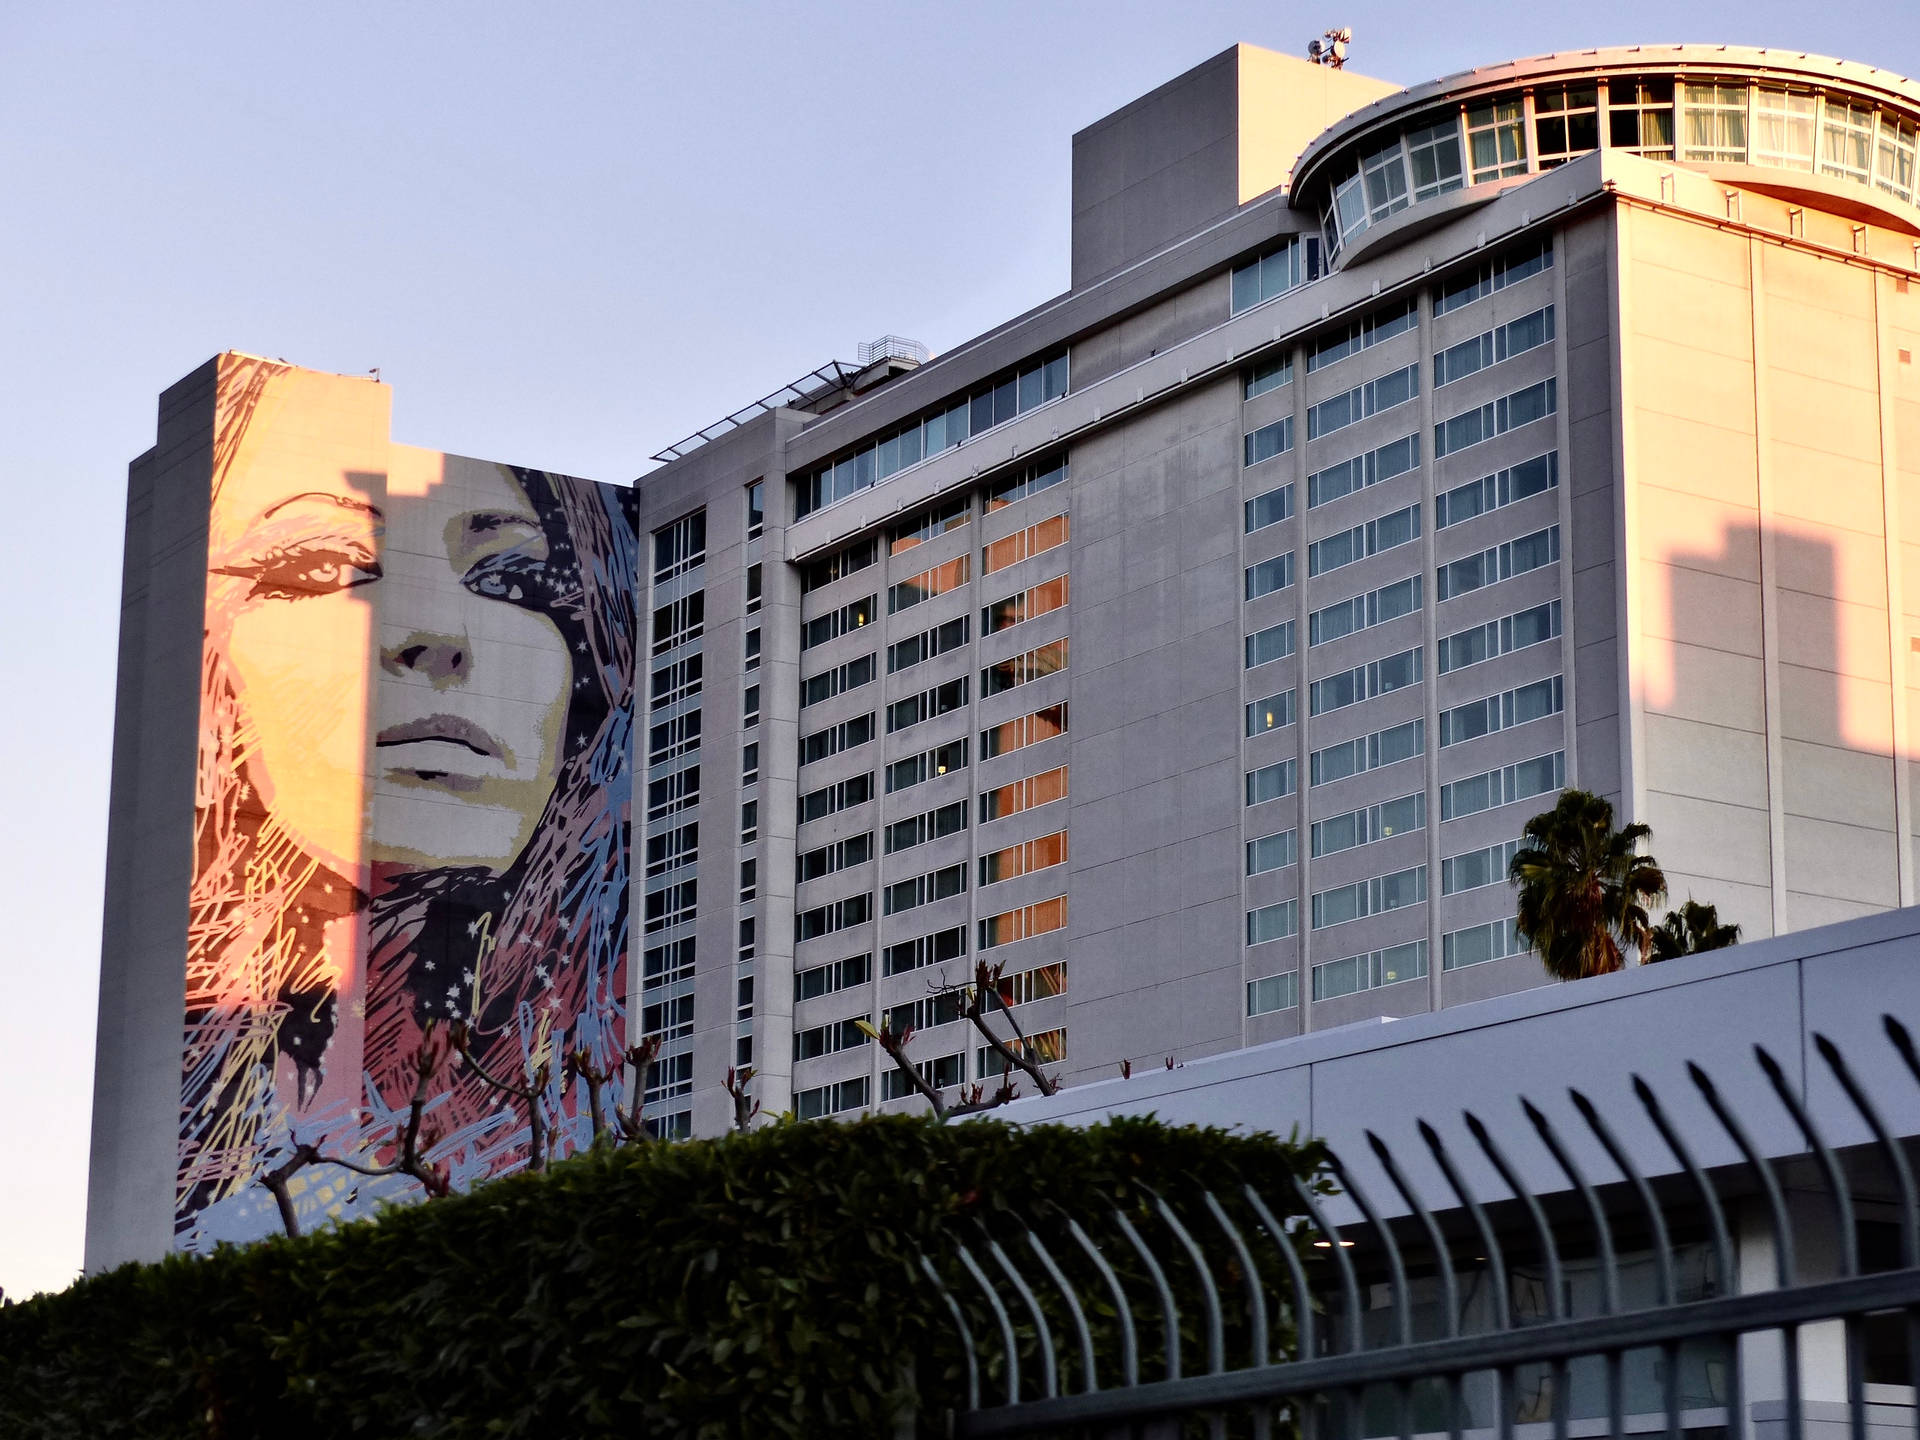 Hollywood Street Building Mural